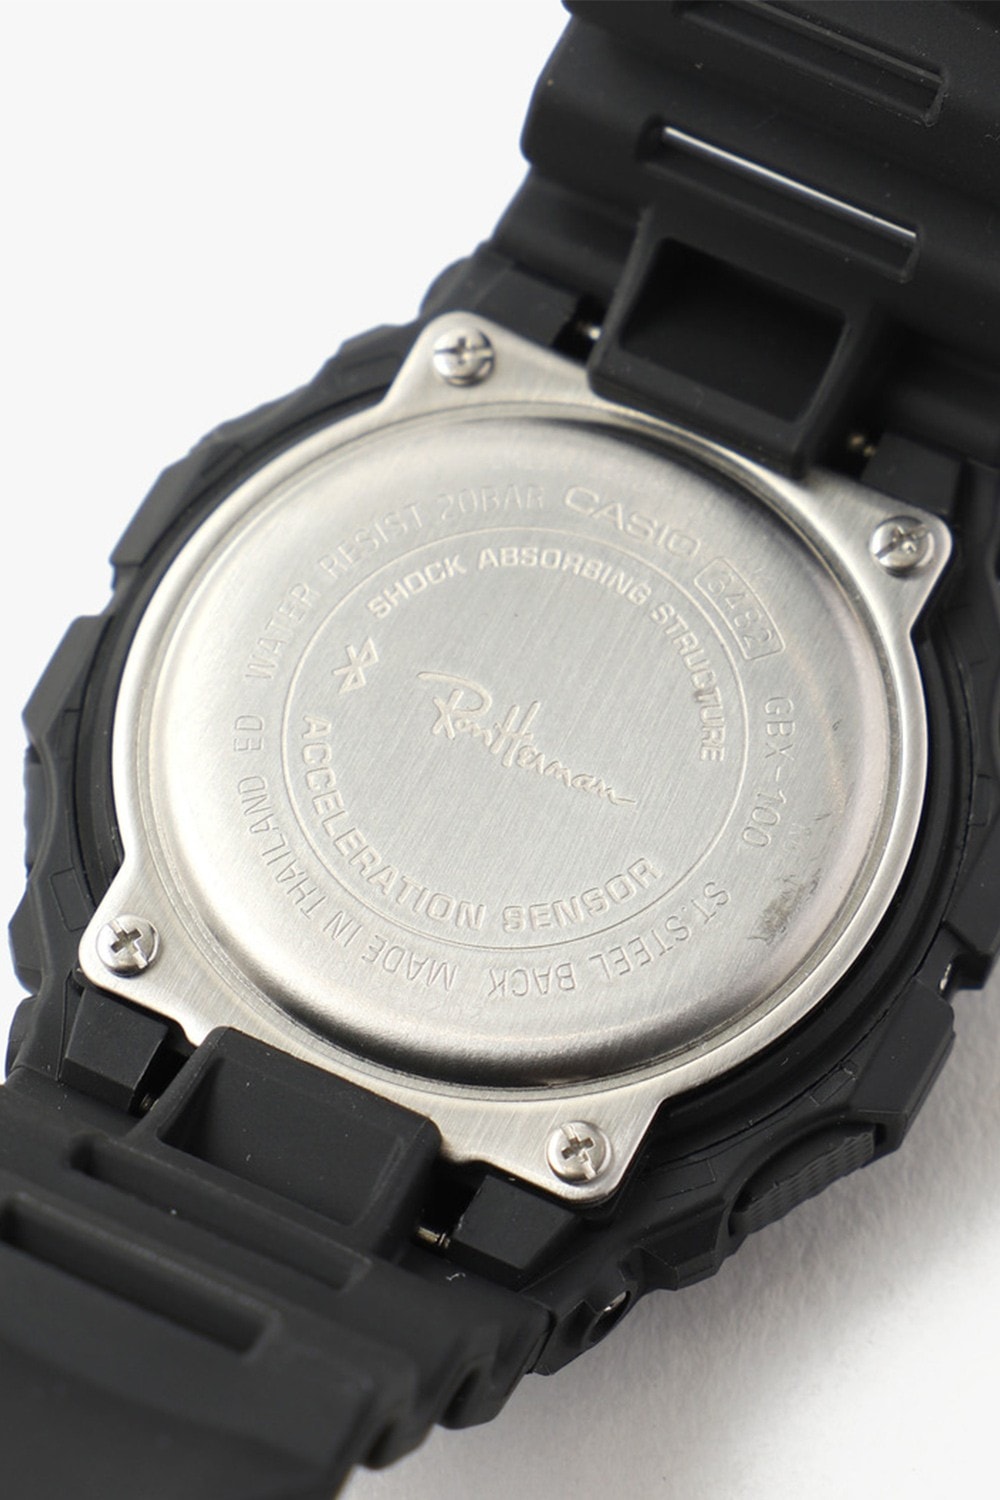 Ron Herman 攜手 G-Shock 推出全新 GBX-100 聯乘錶款